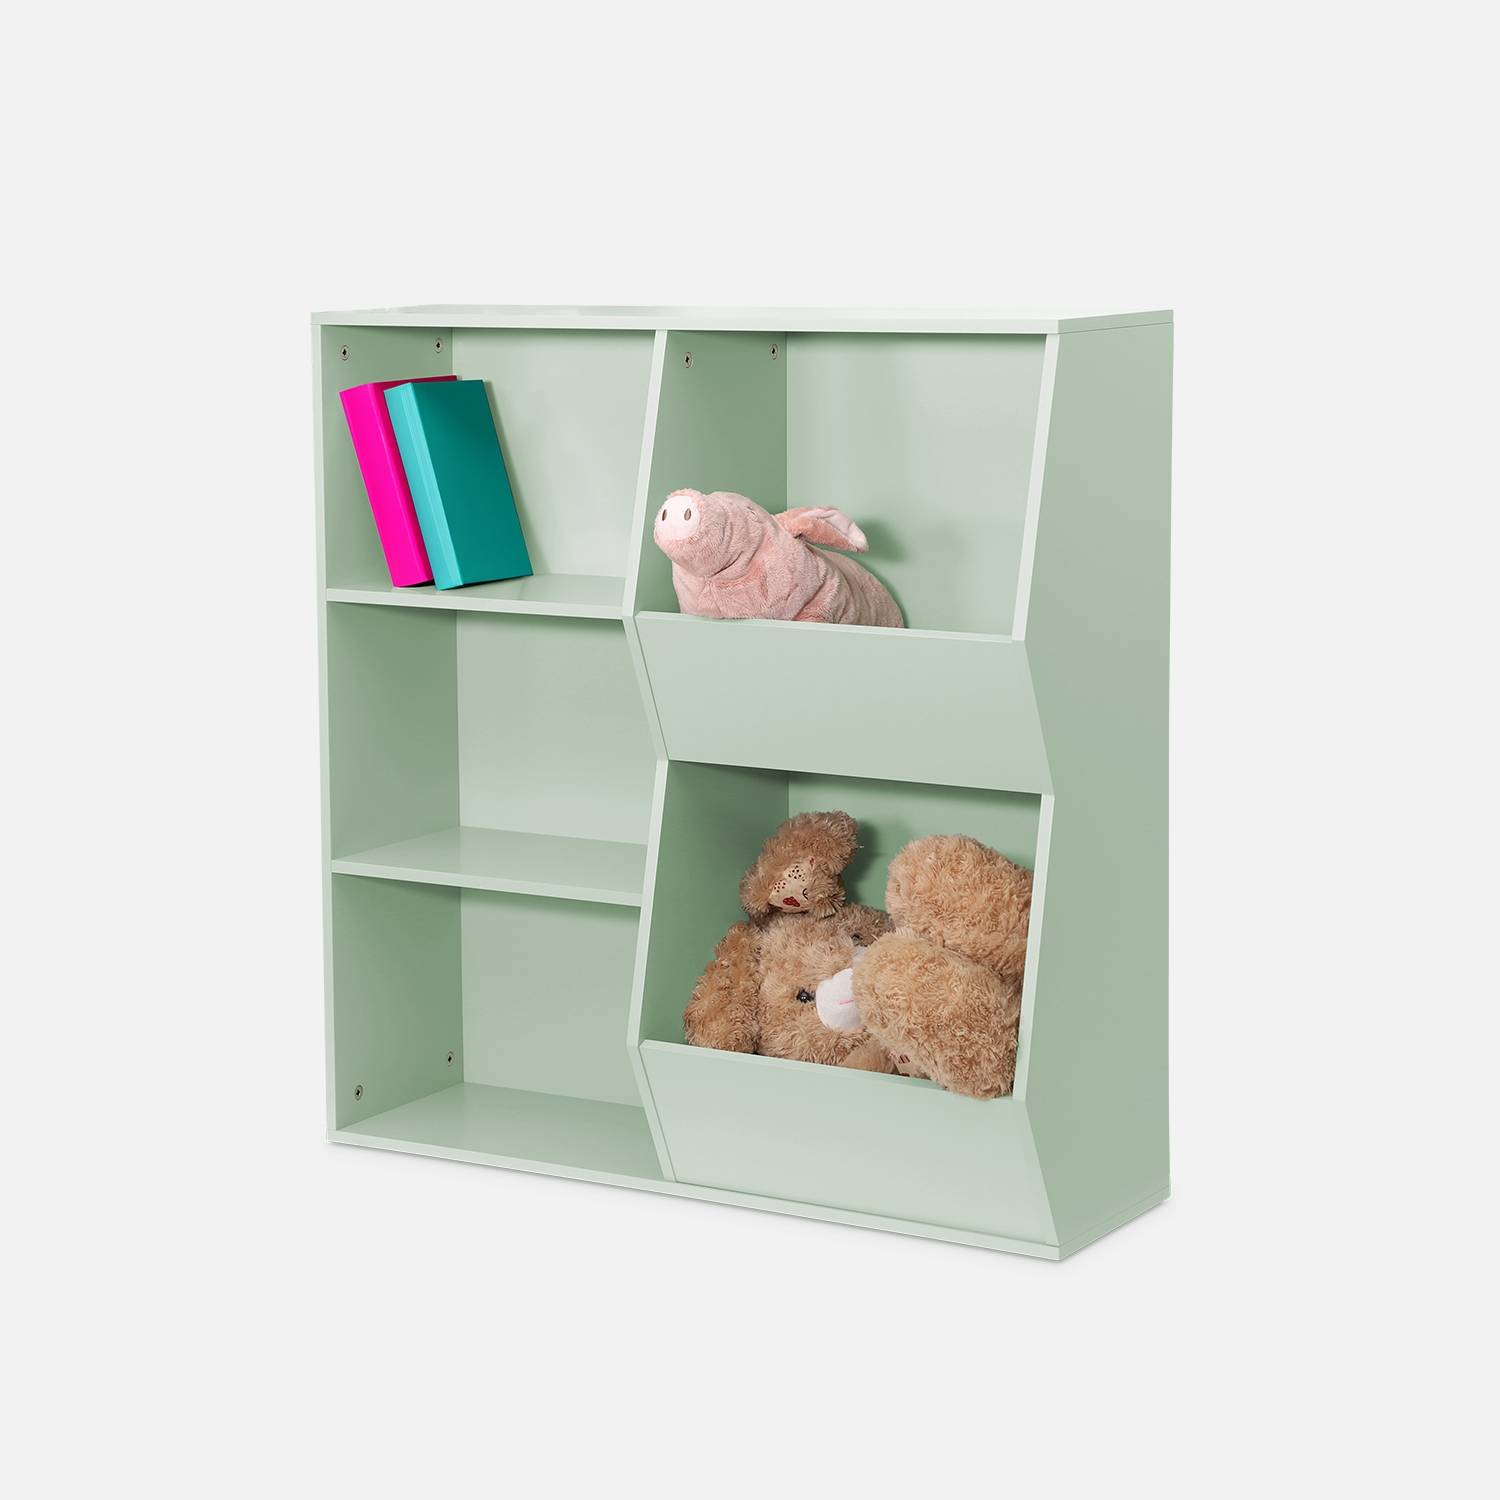 Children's storage unit, 3 shelves and 2 storage spaces, Green